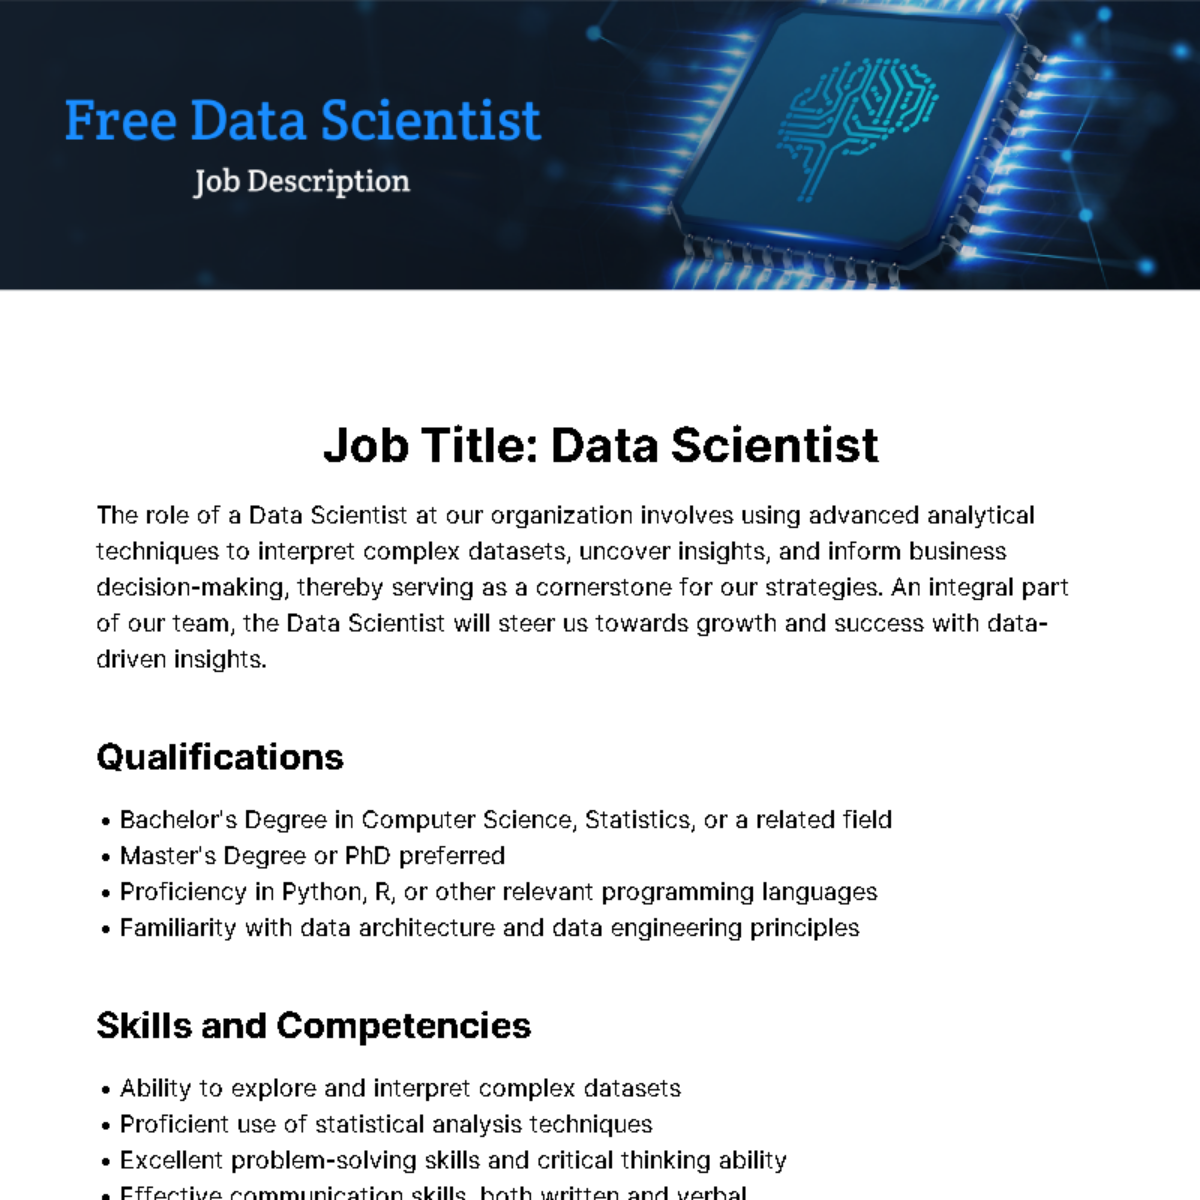 Free Data Scientist Job Description Template